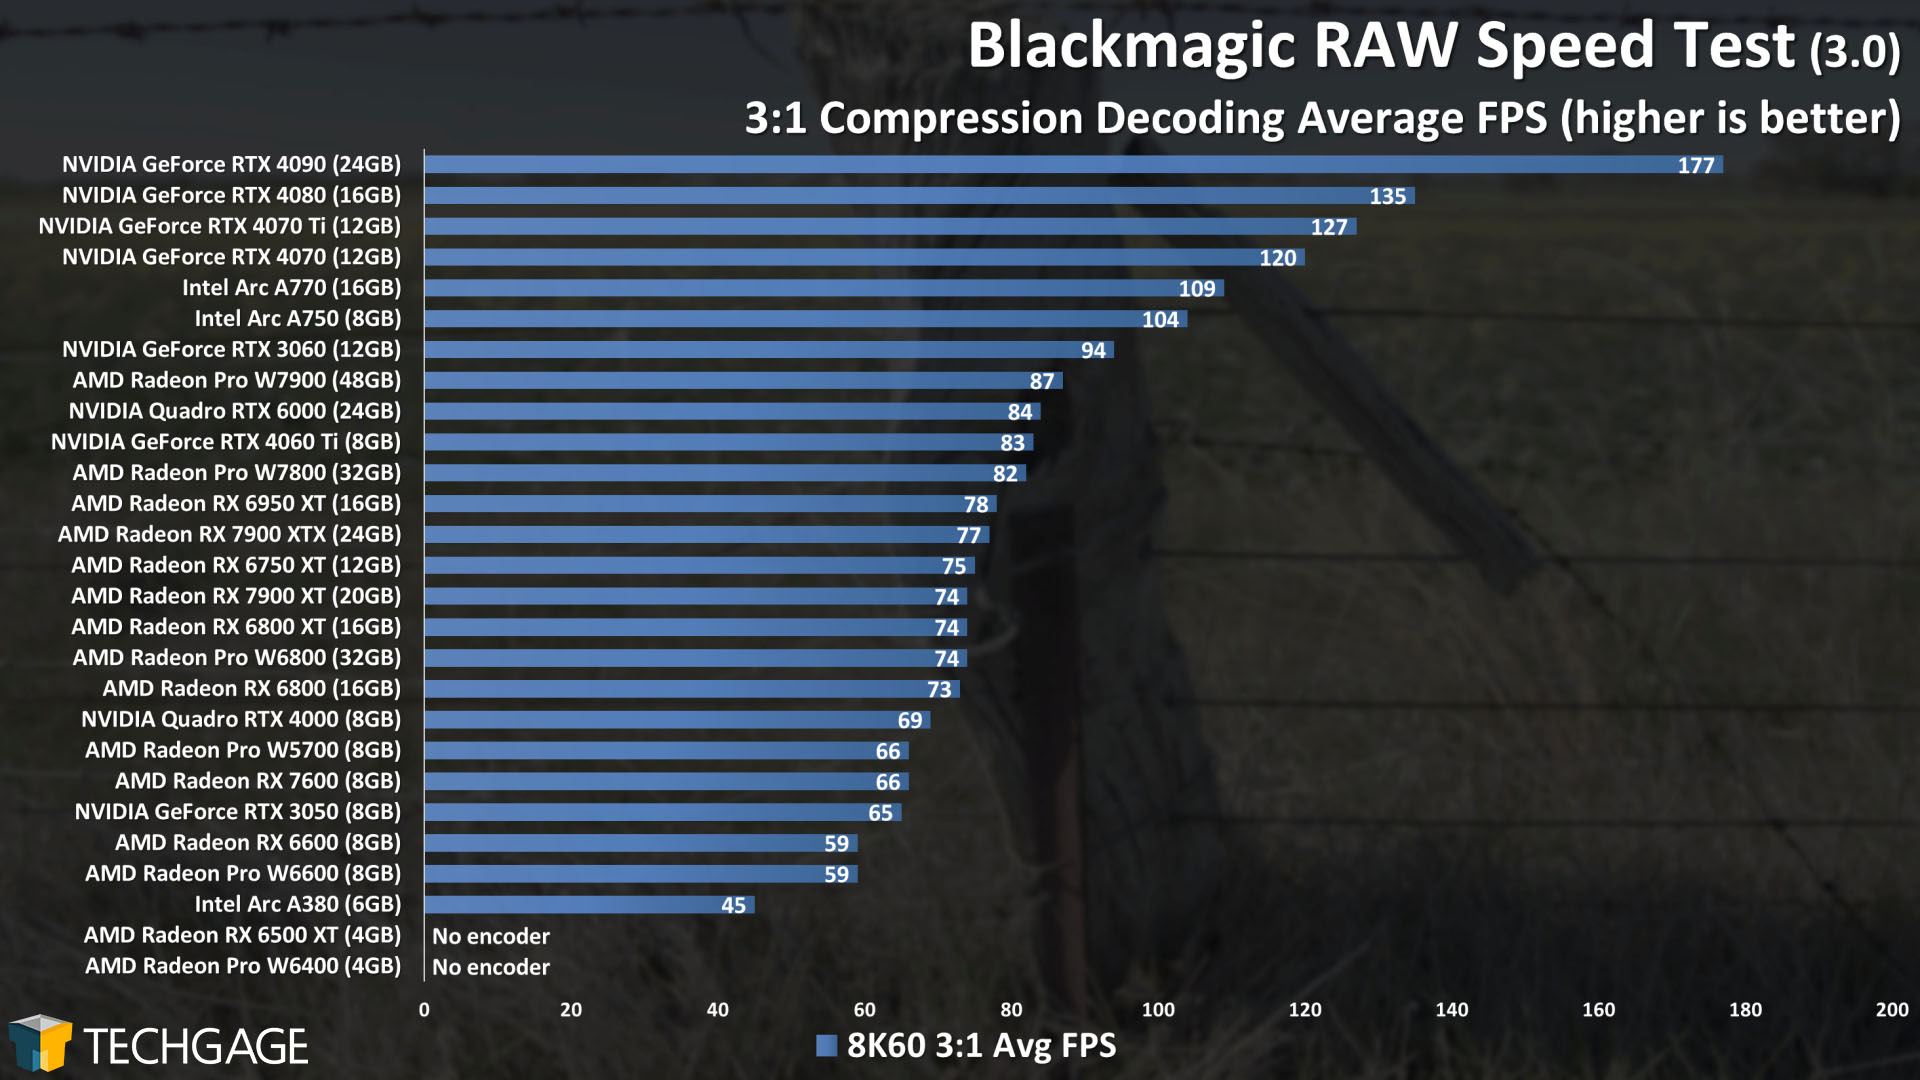 BRAW - GPU Decoding Framerate (3-1 Compression)